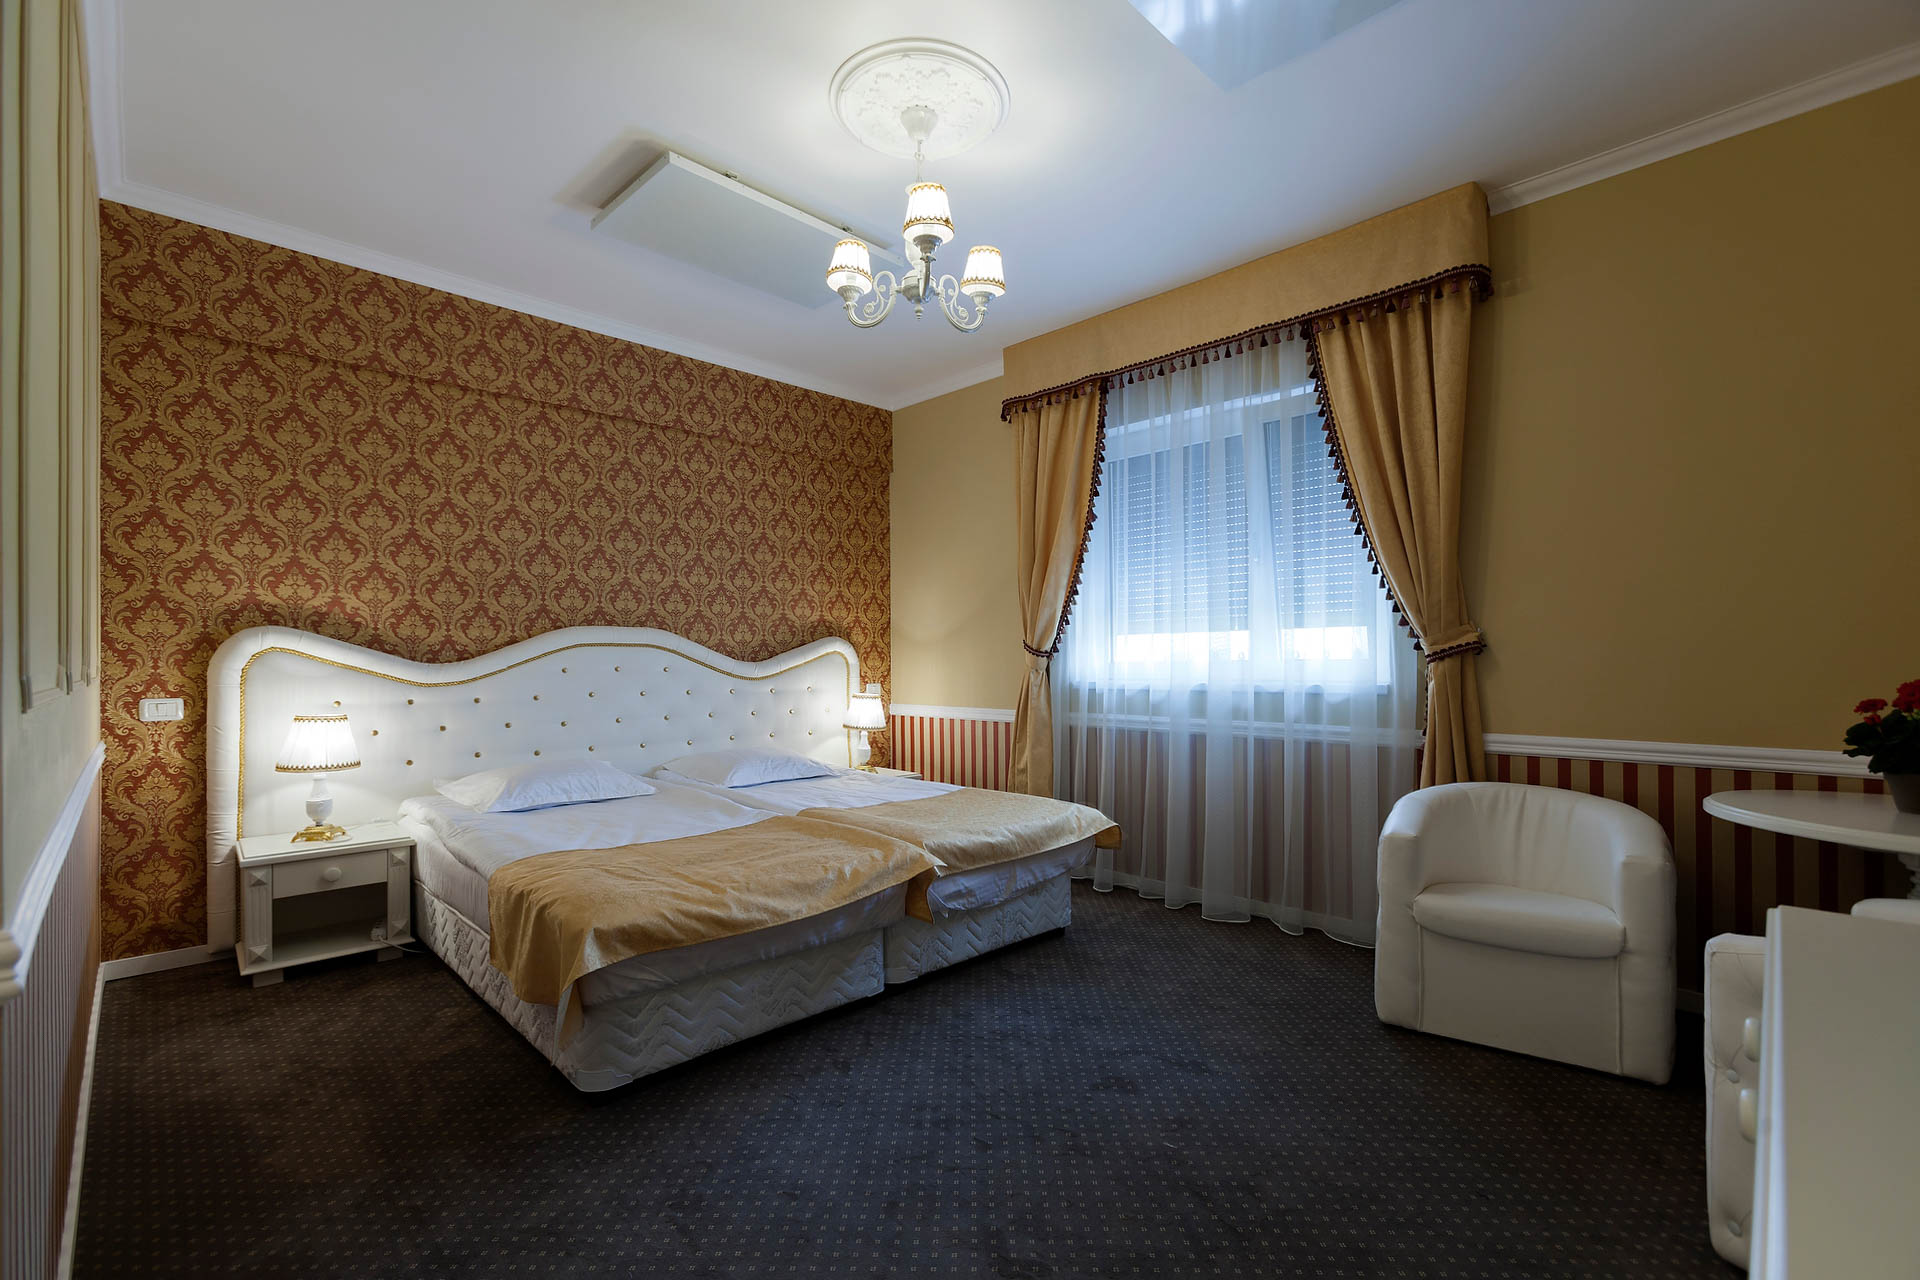 Accommodation Brasov - The Harghita Room